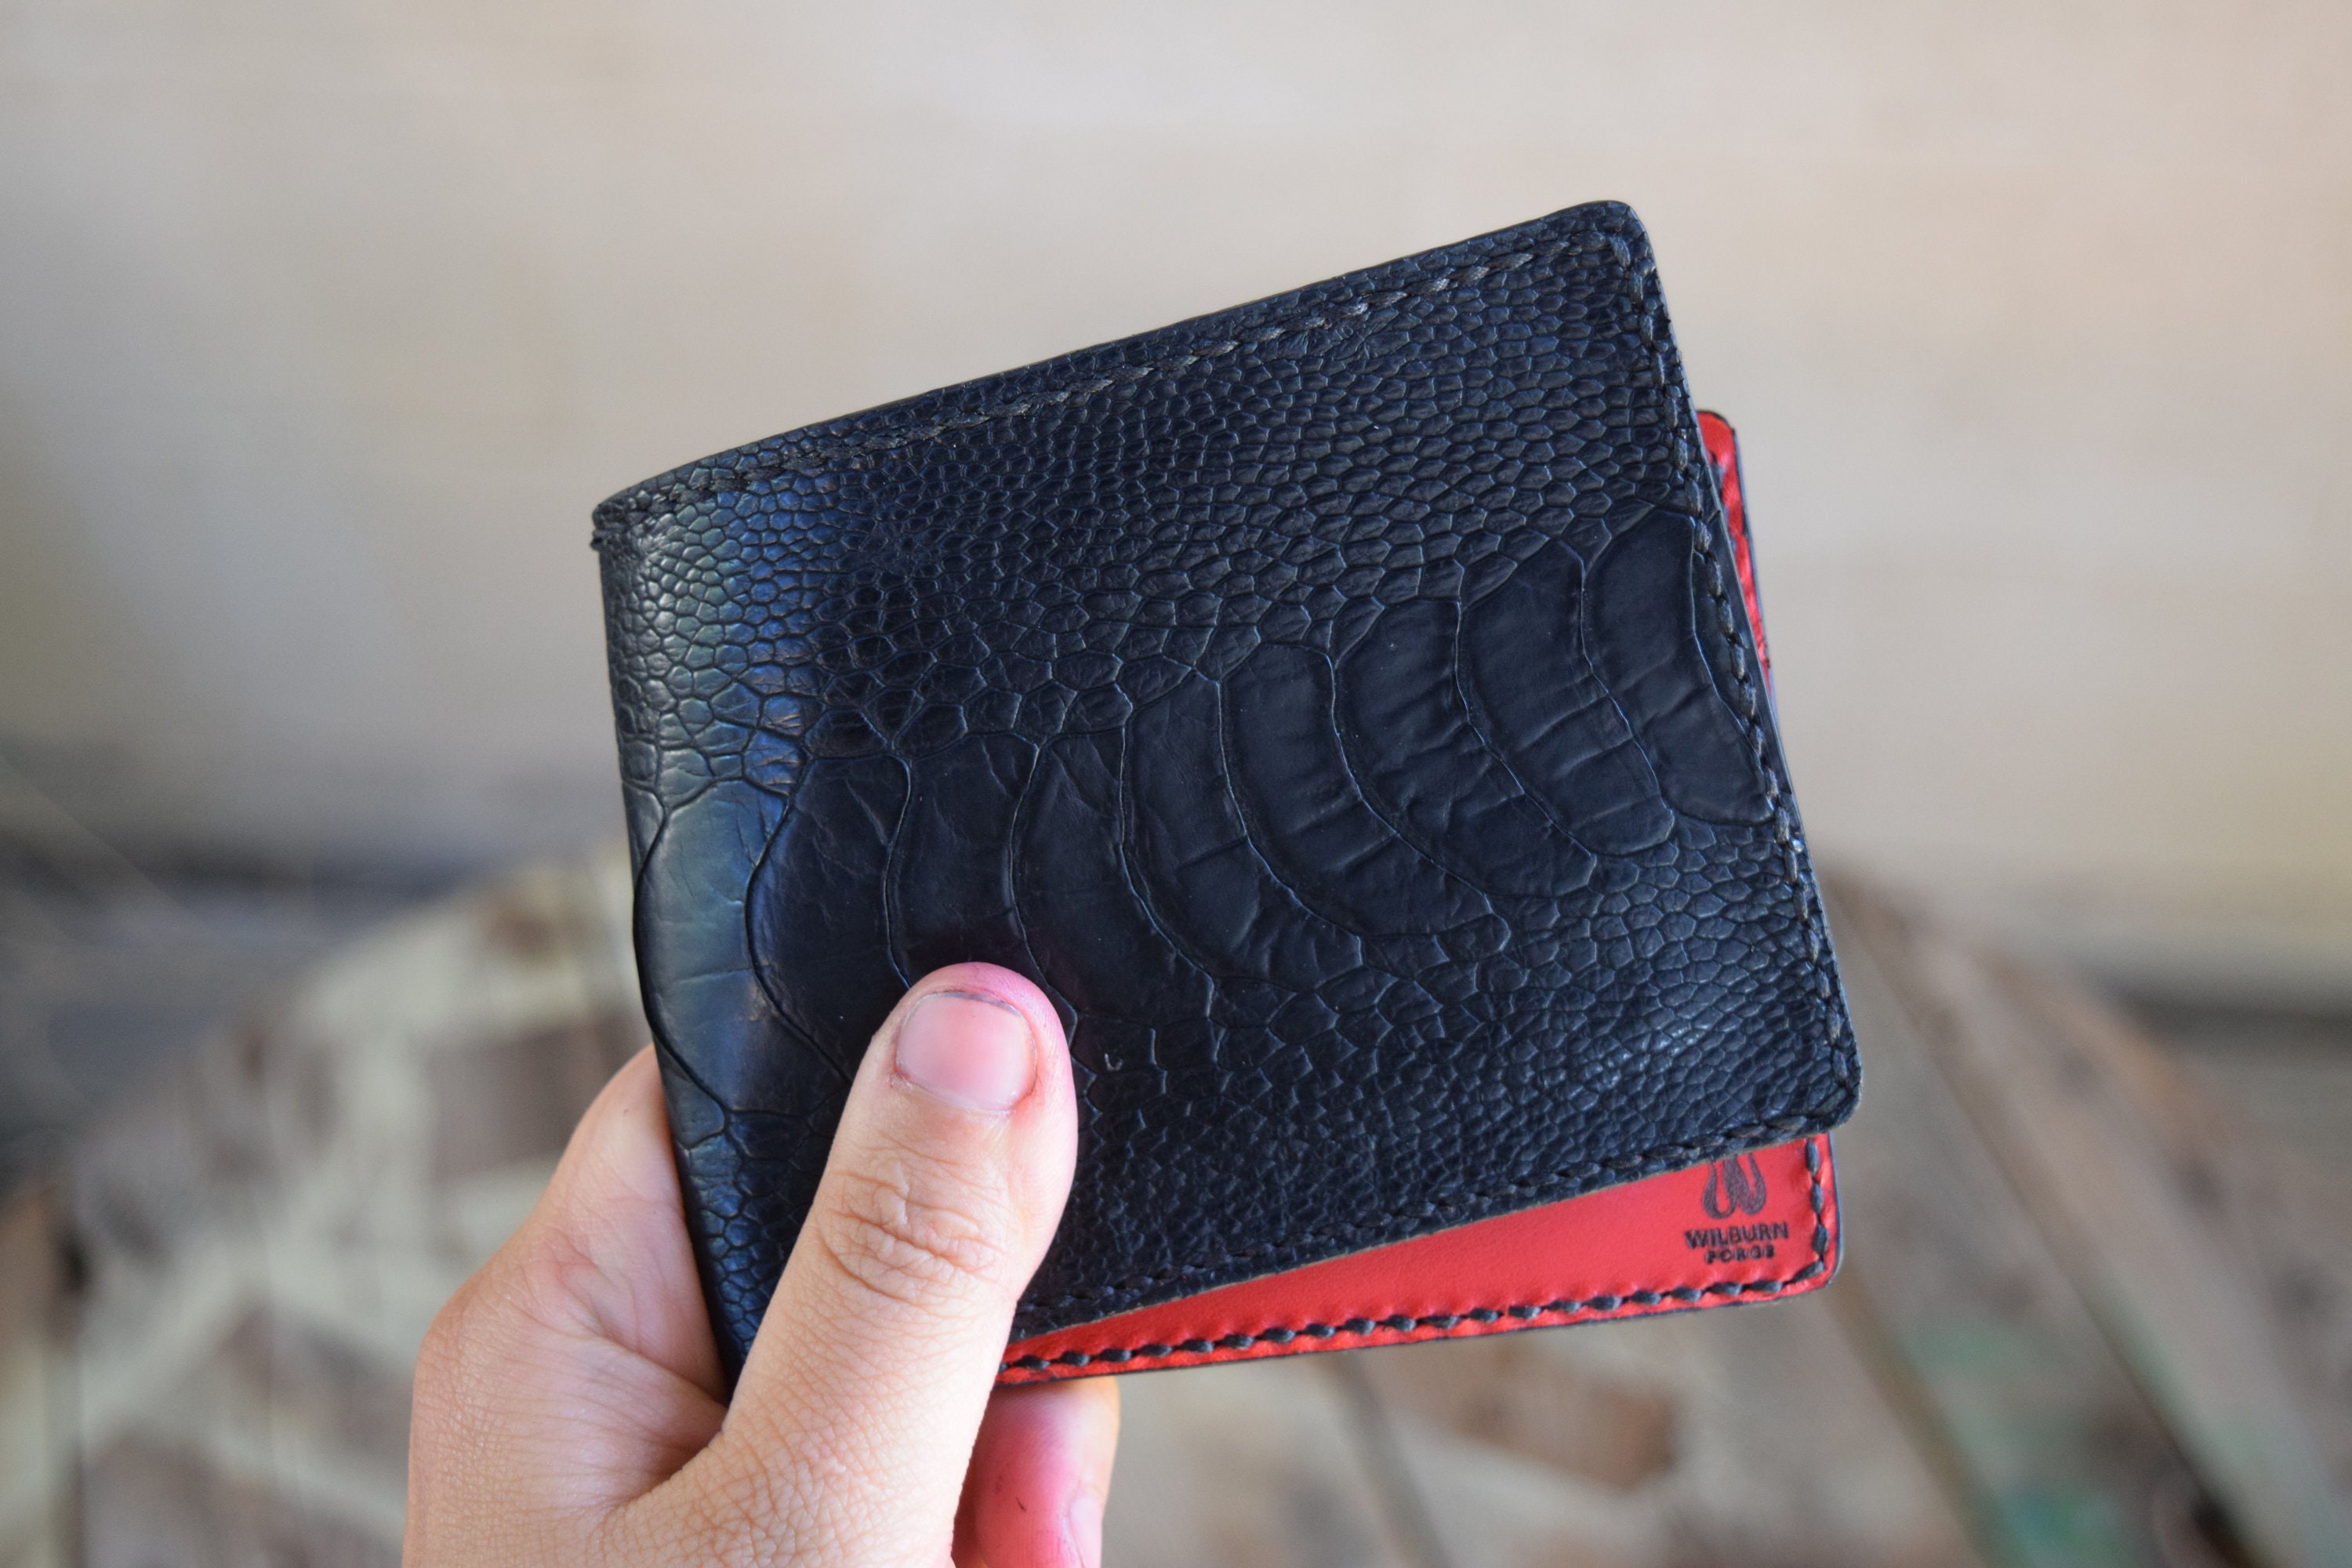 Male Handcrafted Premium Black Ostrich Leg Leather Wallet by Rakshantra